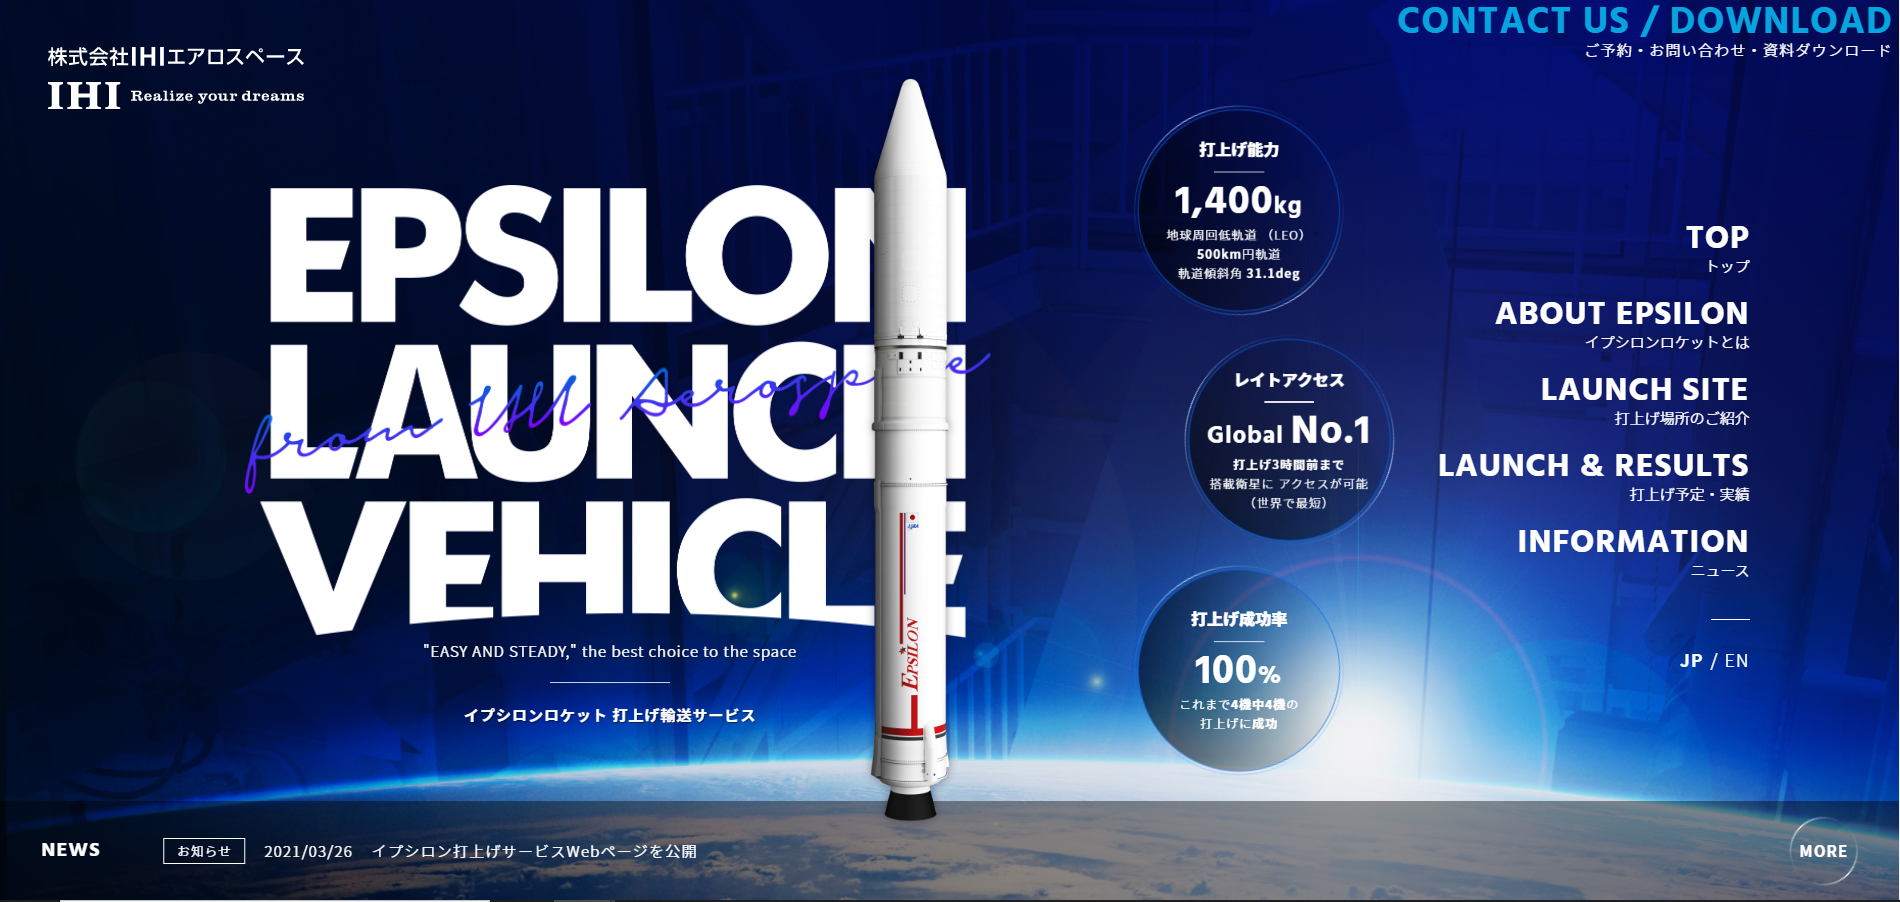 「IHIエアロスペース ロケット打上げ輸送サービスサイト」が「2021日本BtoB広告賞」銀賞を受賞